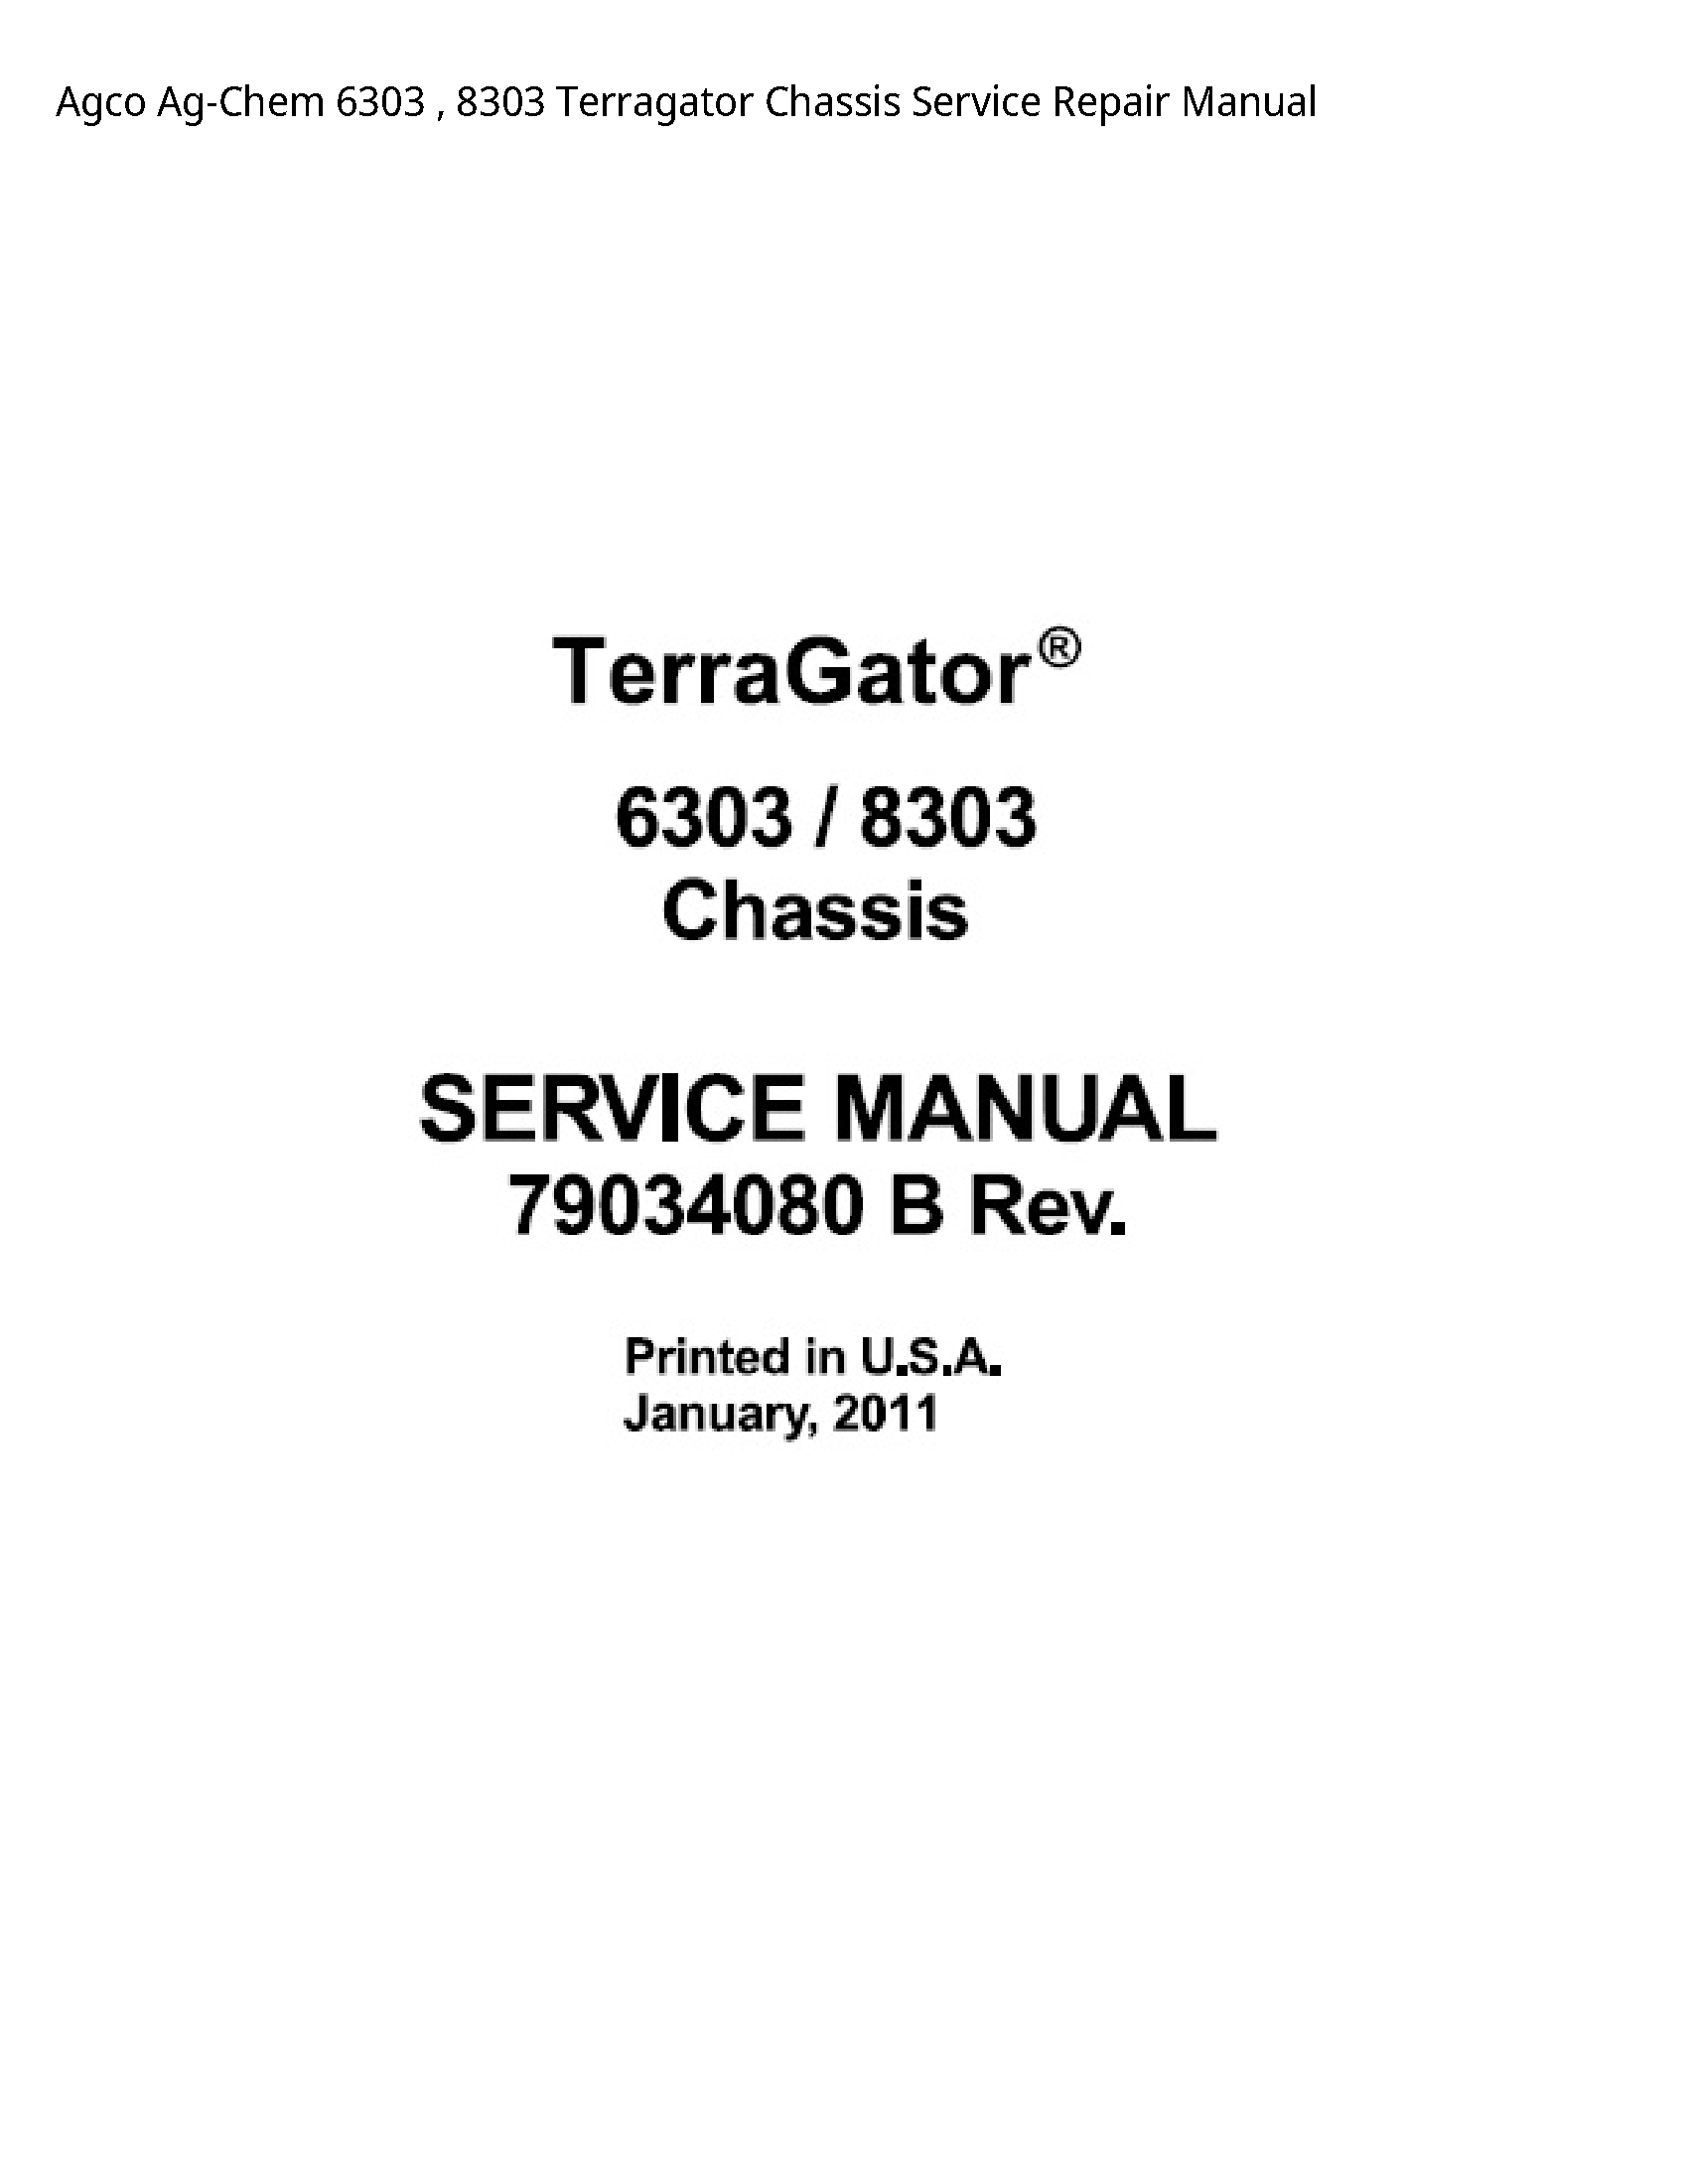 AGCO 6303 Ag-Chem Terragator Chassis manual